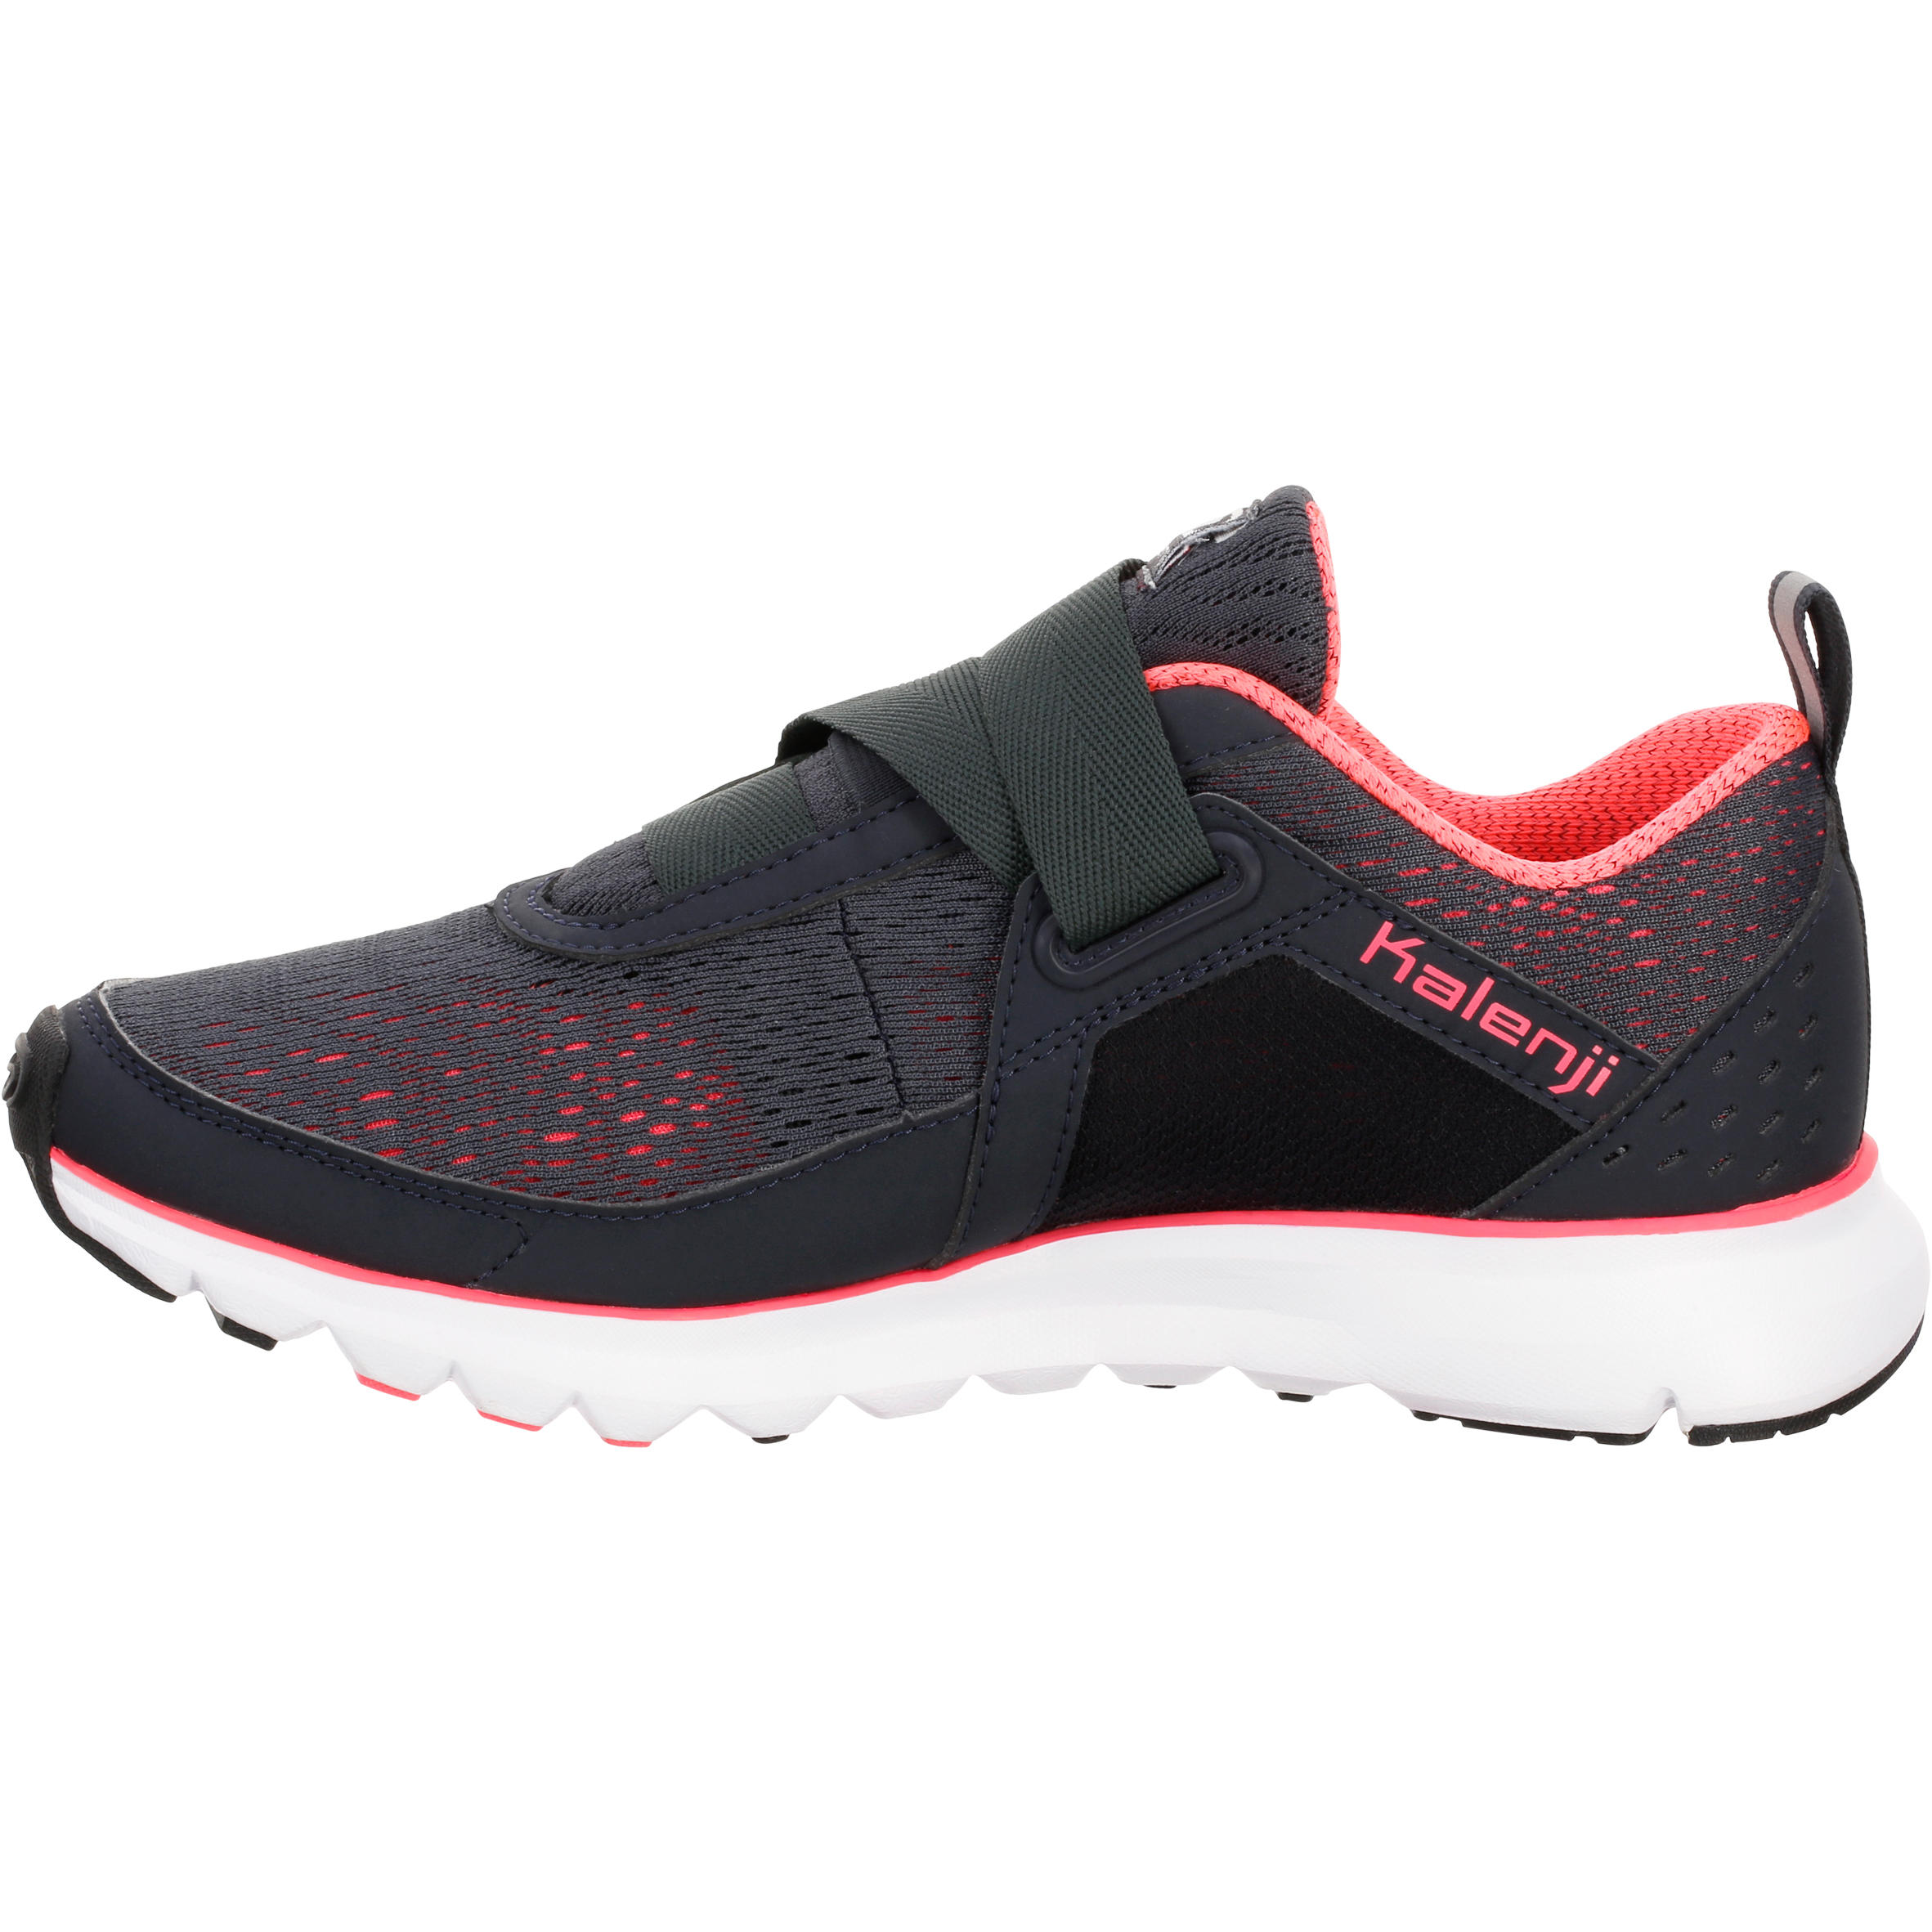 Run Eliofeet Women's Running Shoes - Grey/Pink  3/18